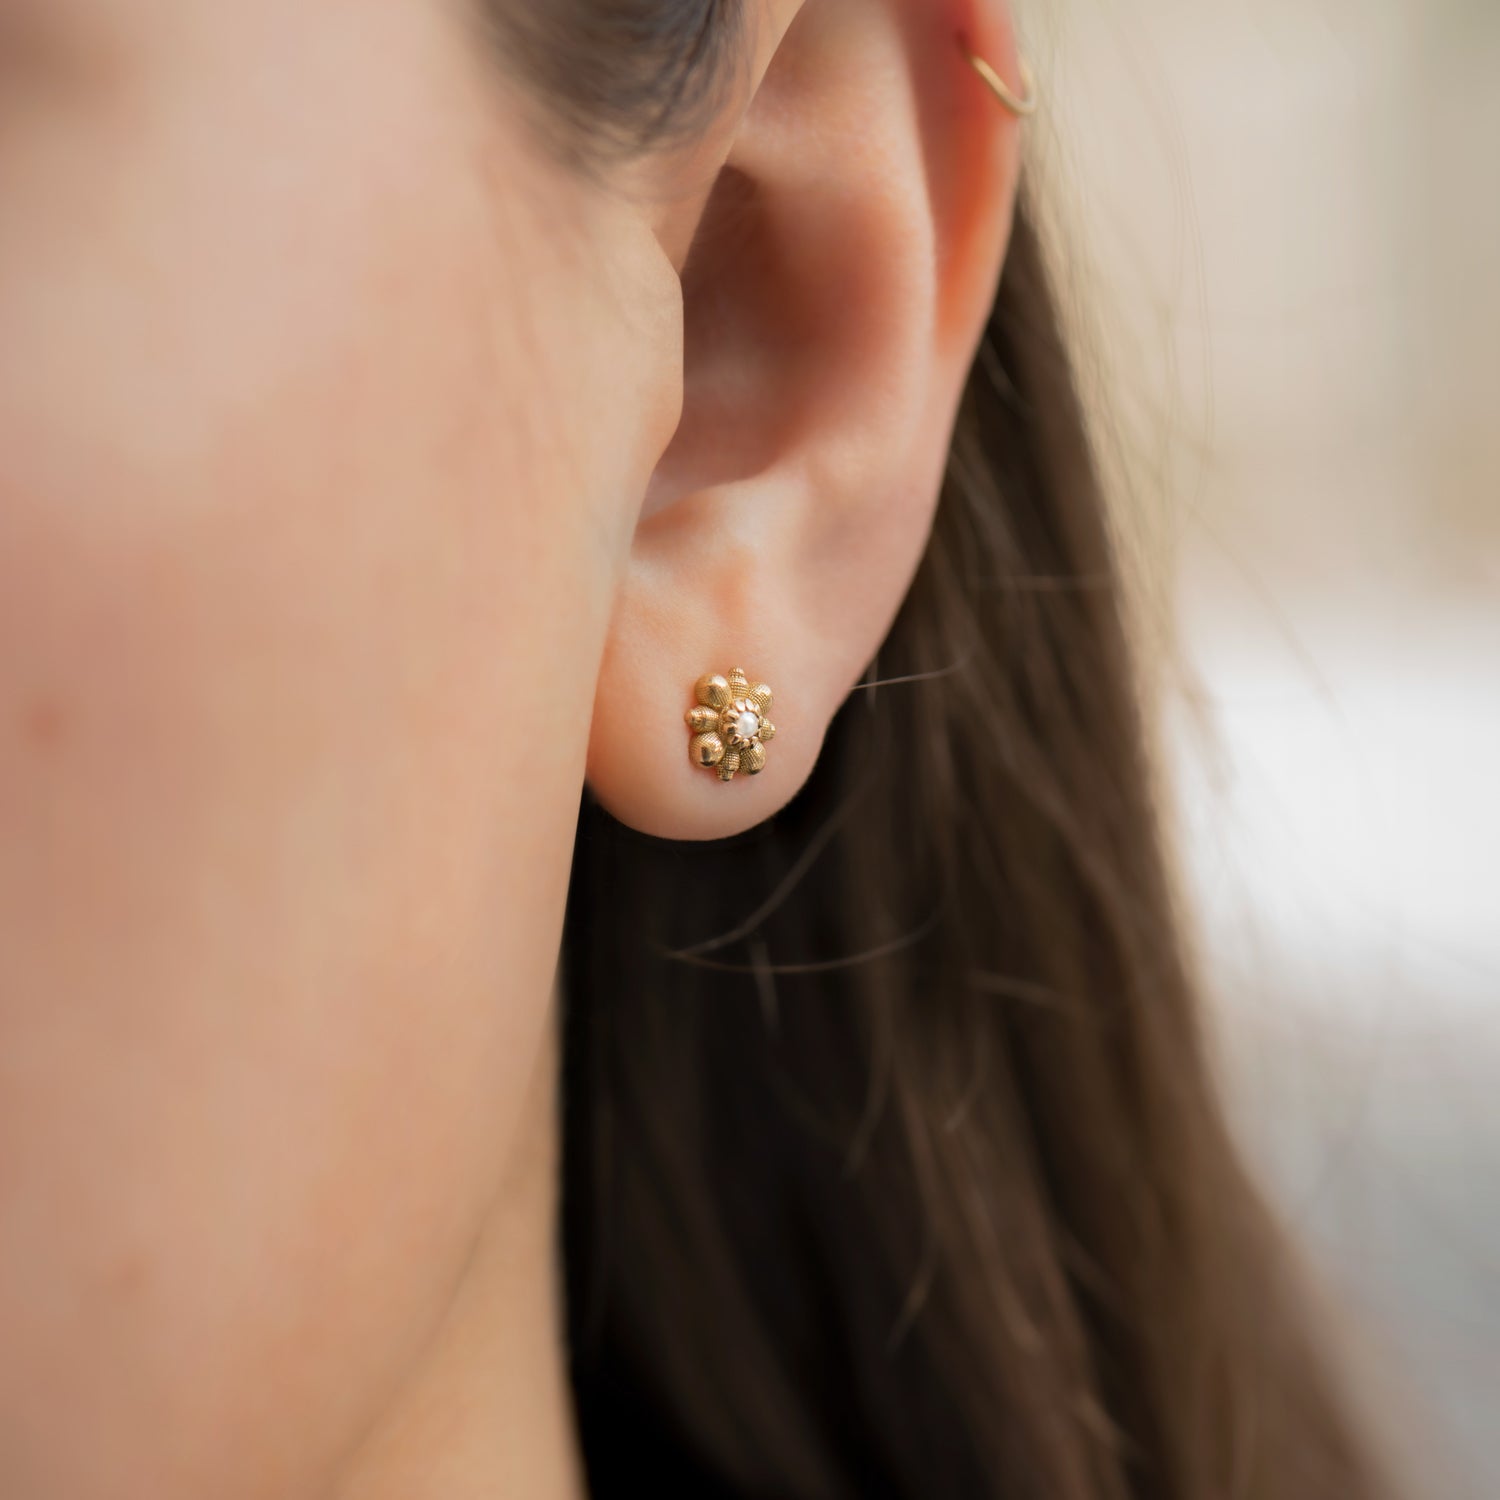 14K Solid Gold Stud Flower Stud Earring Minimalist Stud Earrings